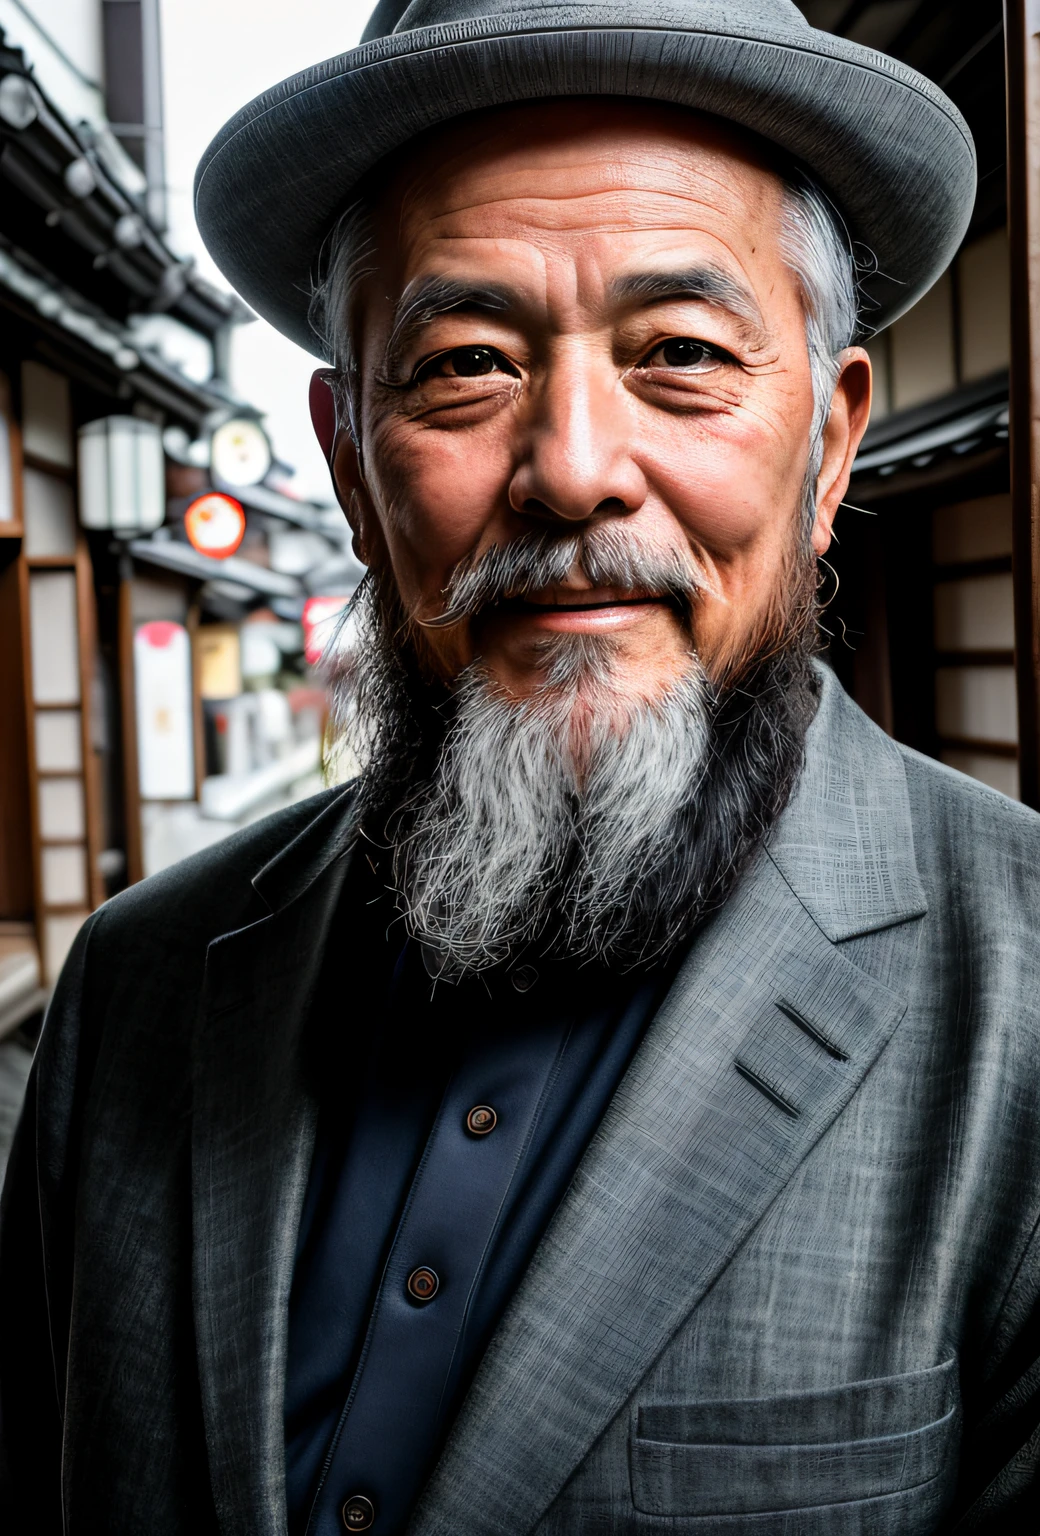 Bearded,60-year-old japanese man RAW photo of Japan, Cinematic, detaile, Photorealistic, hyper realistic photography, 8K UHD, Digital SLR, Soft lighting, High quality, Film grain, FUJI XT3, (masutepiece),